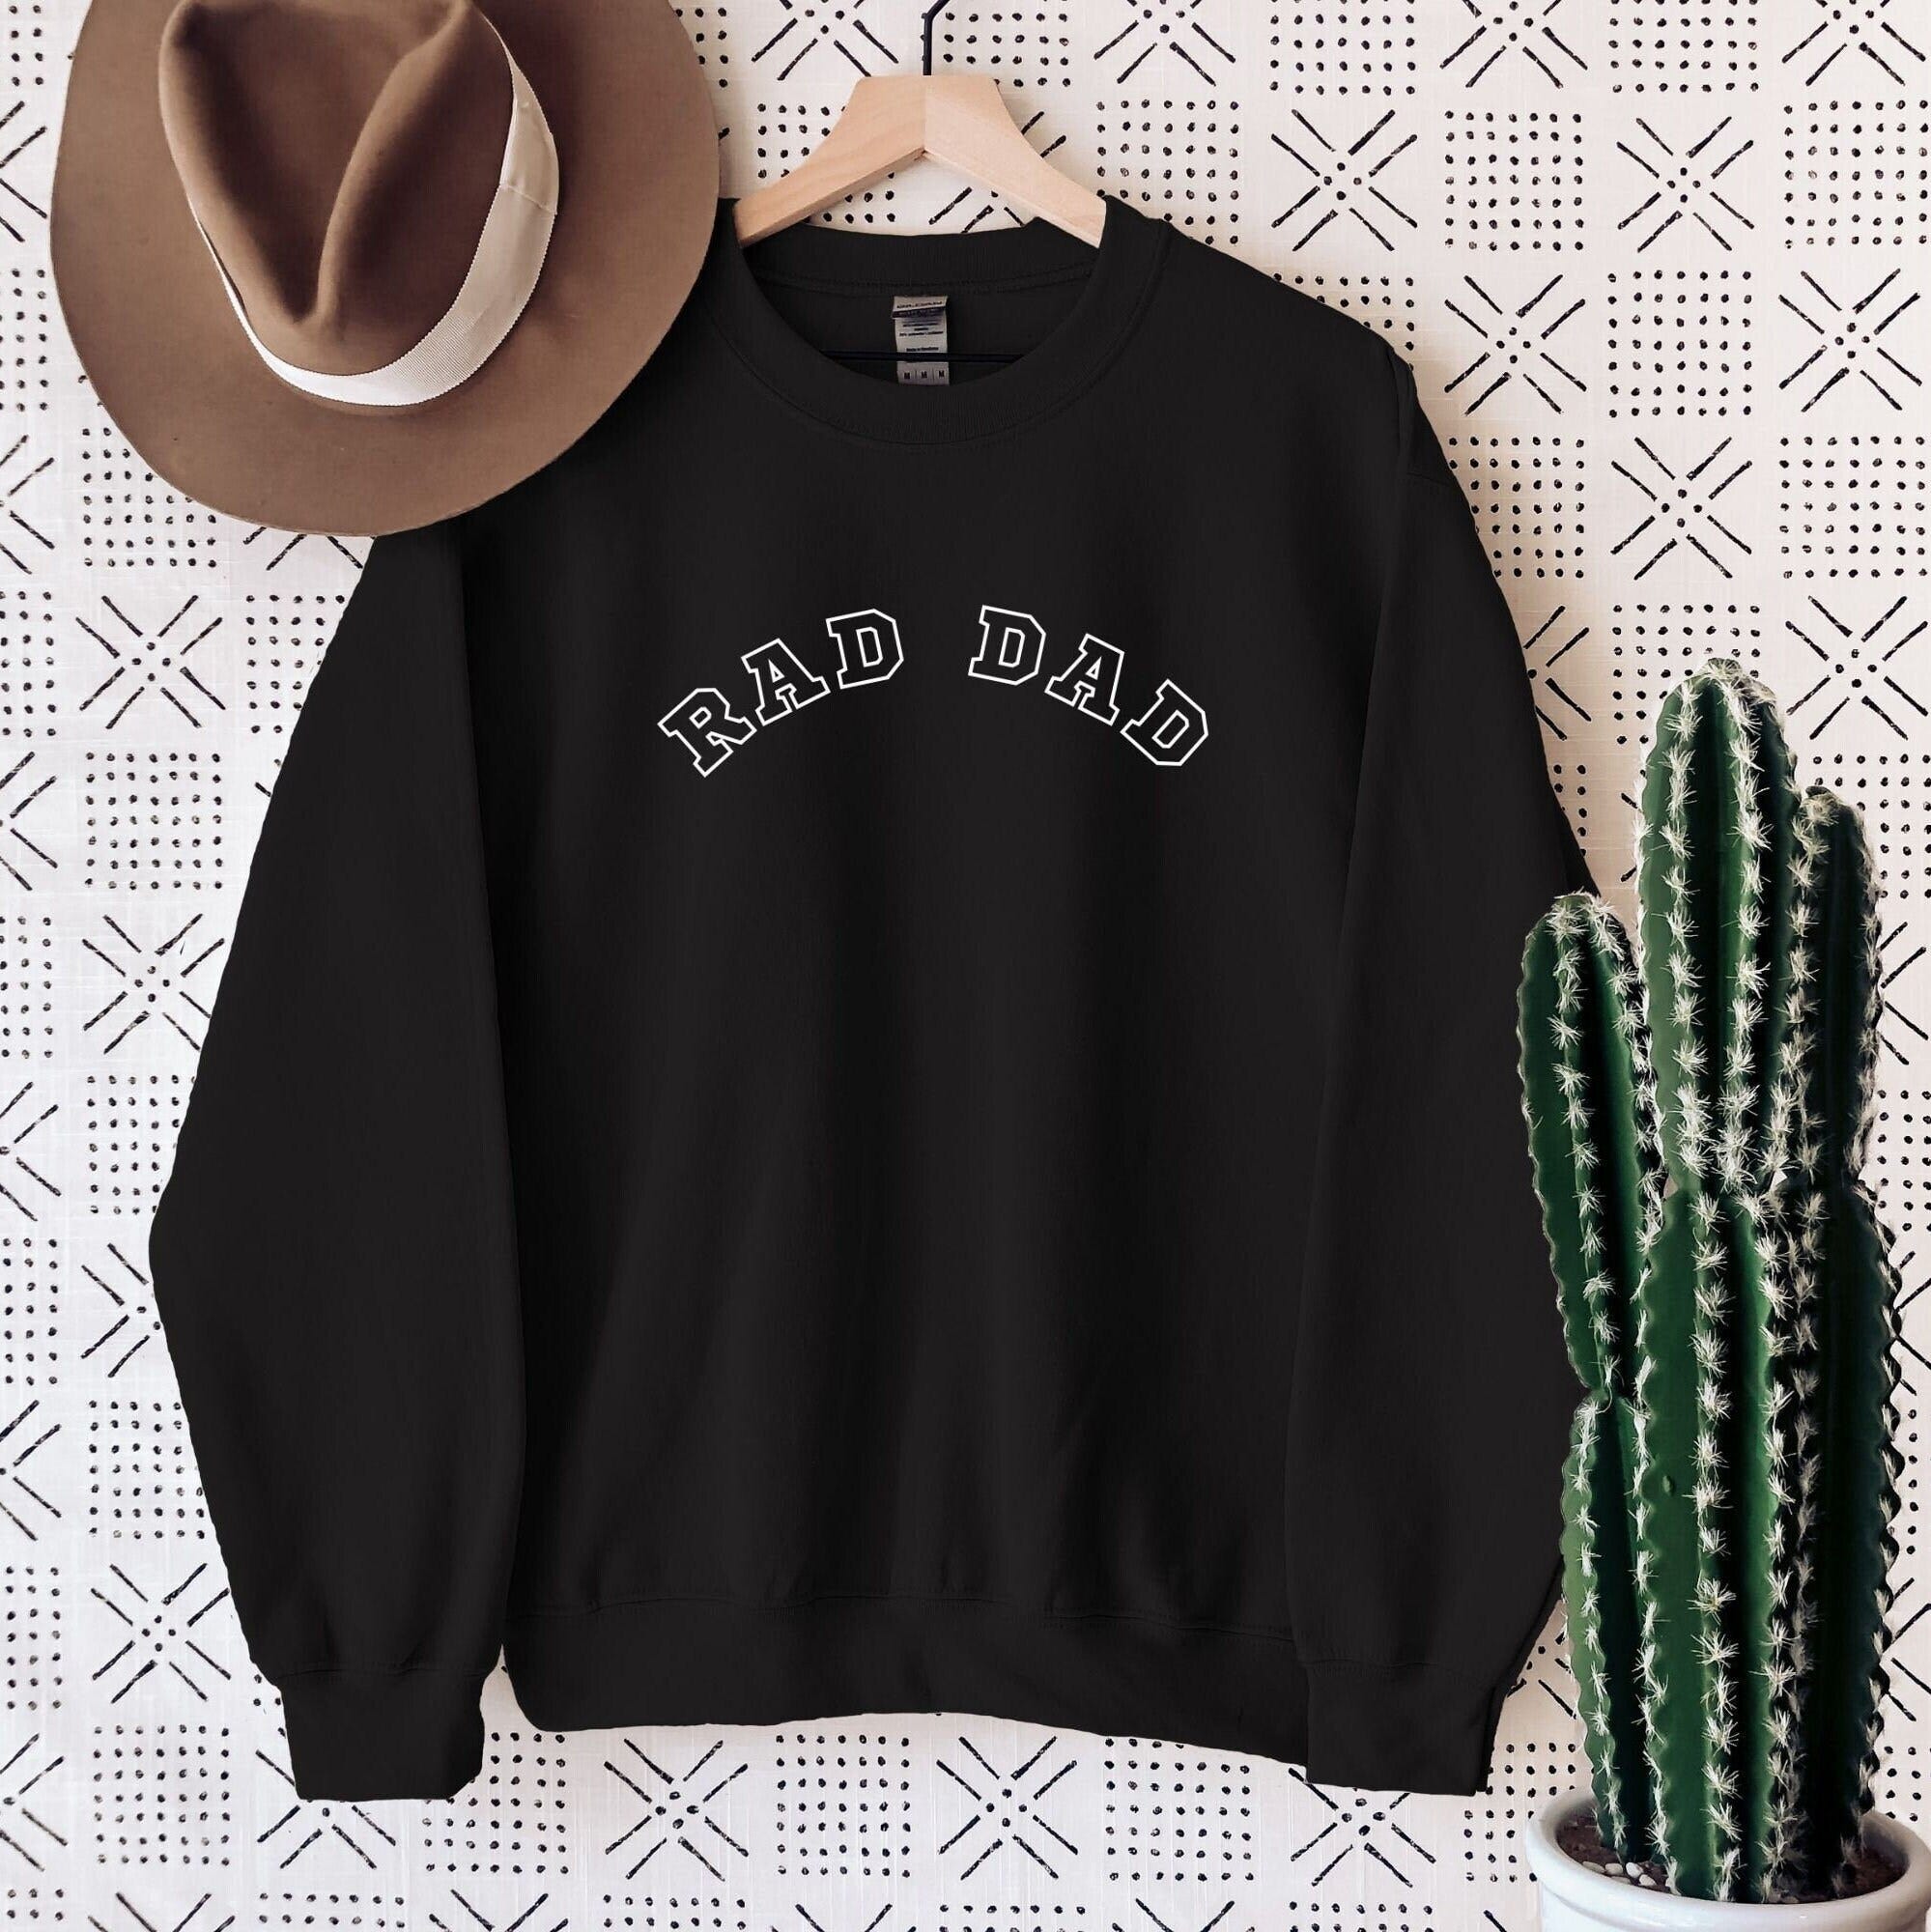 Rad Dad Sweatshirt | Fatherhood Sweatshirt, Cool Dad Sweater, New Dad Gift, Dad To Be, Best Dad Ever Gift, Dad Est Shirt, Fathers Day Gift